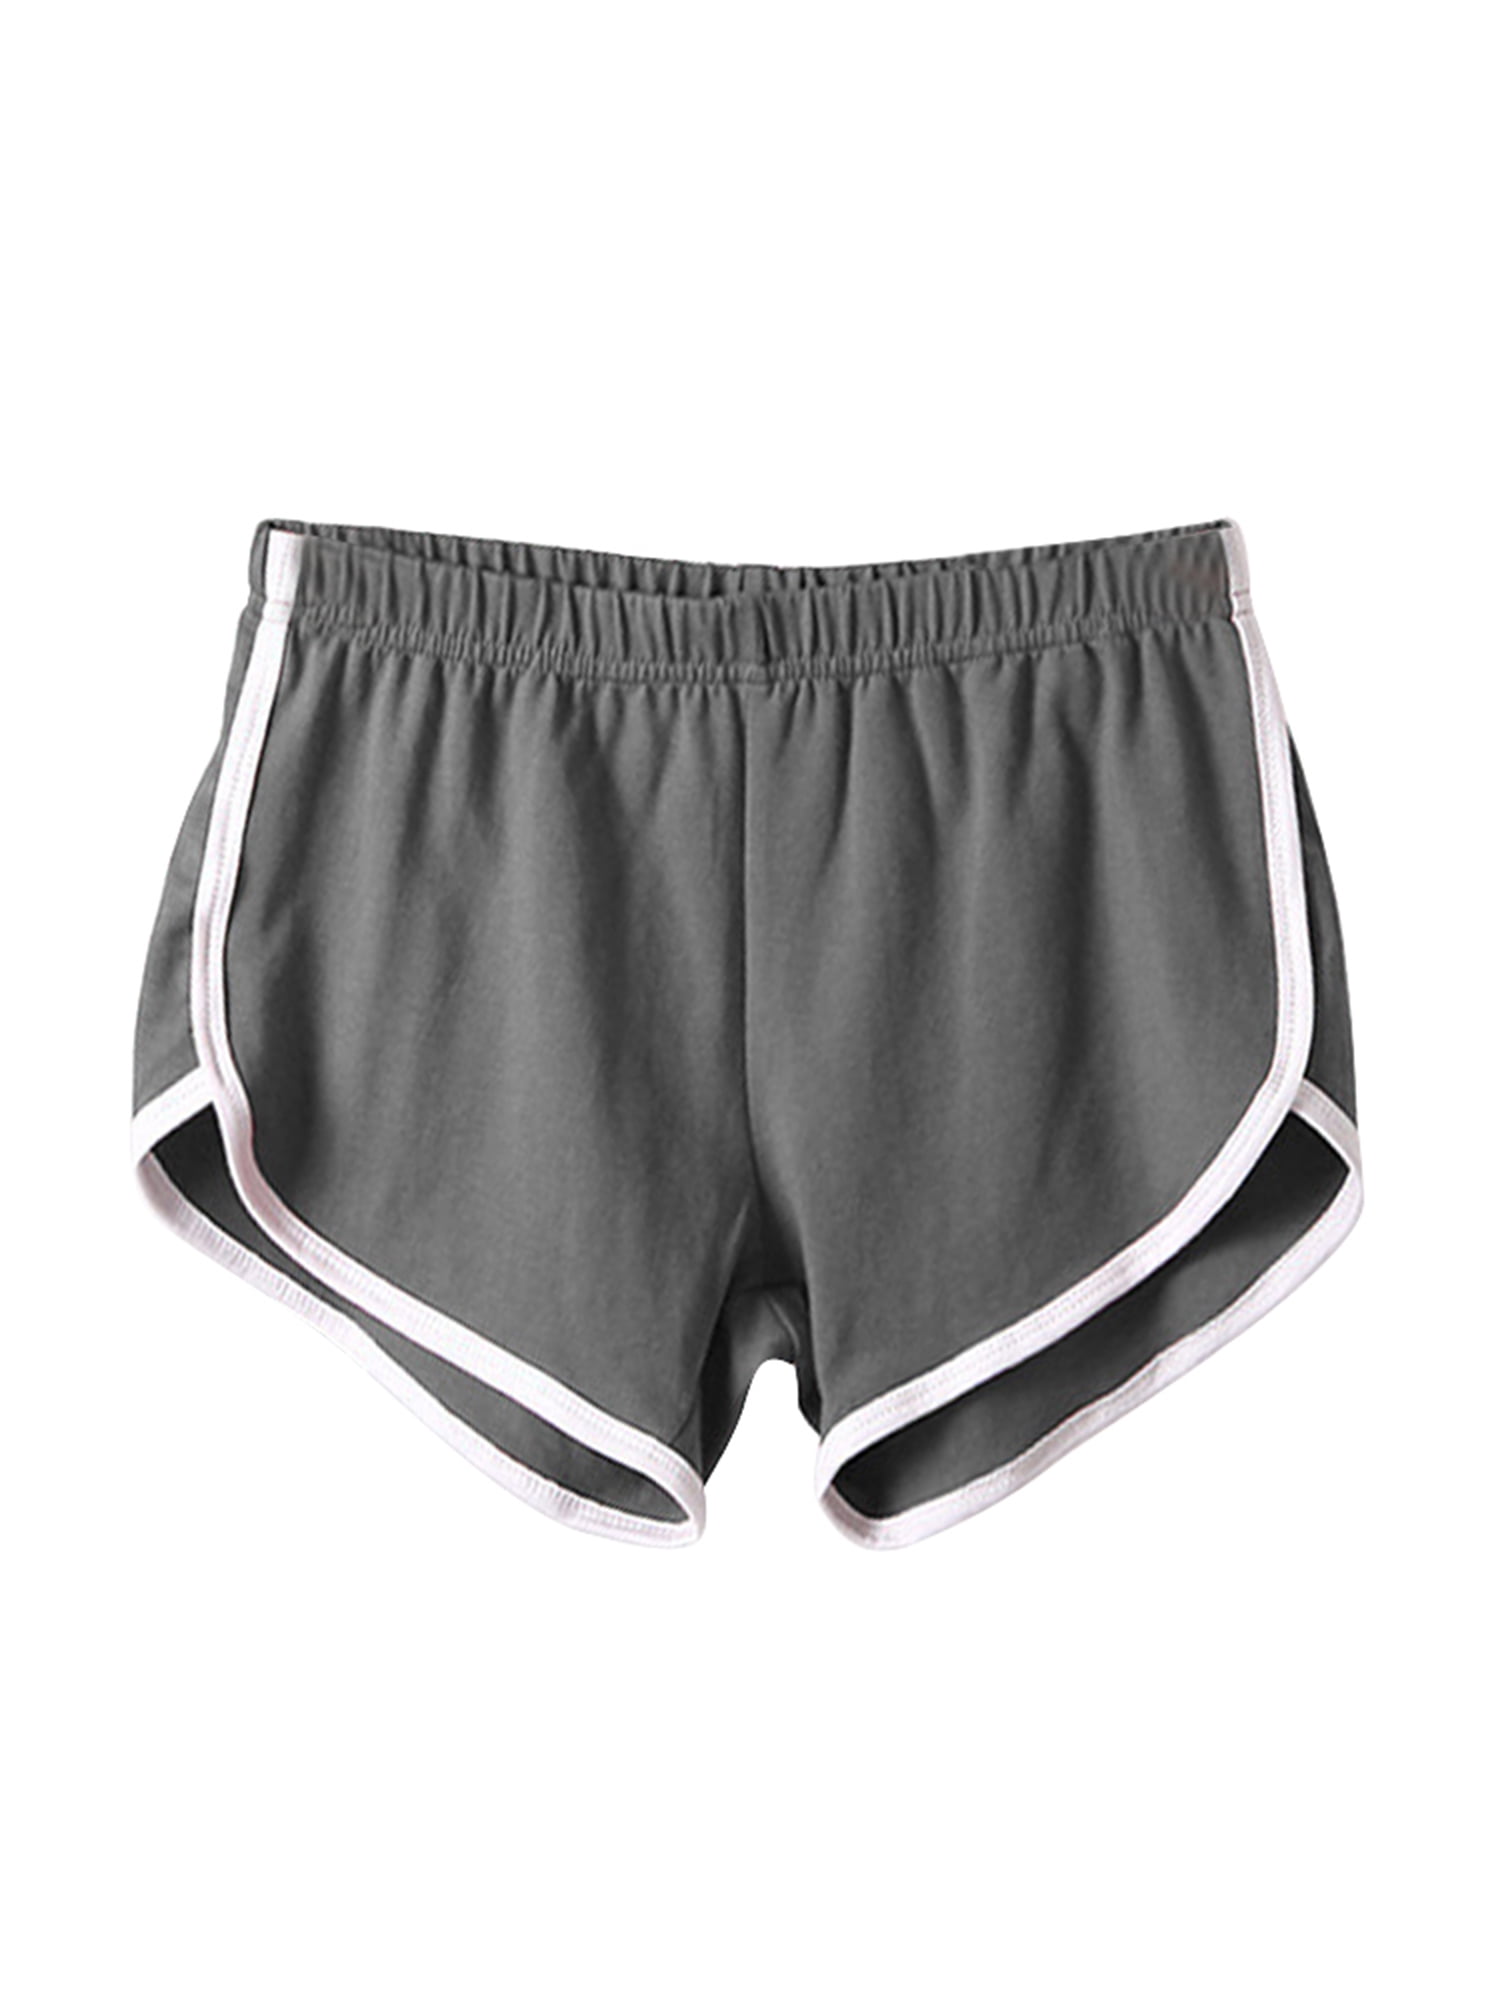 Women Stripe Pocket Loose Hot Pants Lady Summer Beach Shorts Trousers（Gray,XL） 